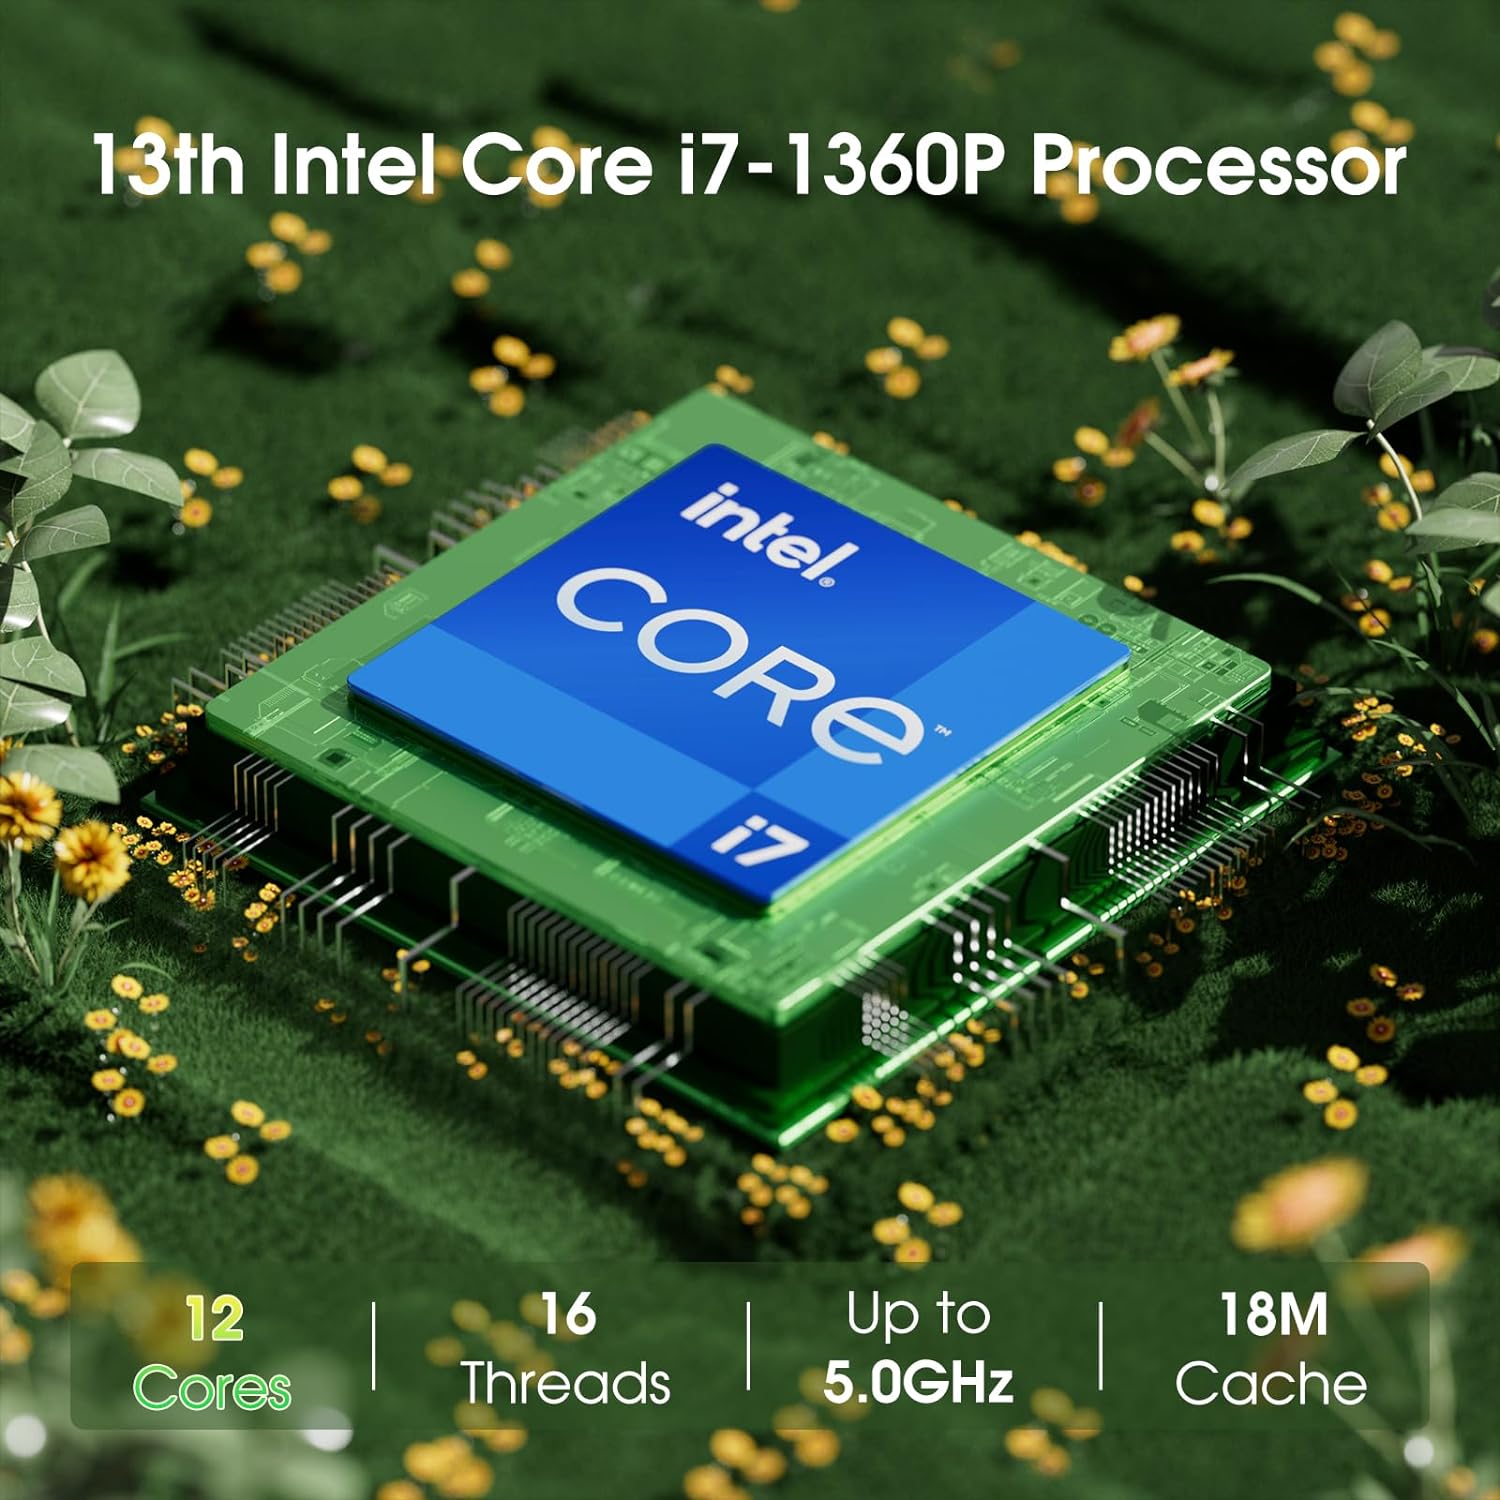 Intel NUC 13 Pro, Arena Canyon Mini Pc with 13th Gen Core i7-1360P (12C/16T  Up to 5.0GHz), 32GB DDR4 RAM  1TB NVMe SSD, Support 8K, WiFi6E, BT5.3, 2 x Thunderbolt 4, Windows 11 Pro, 18M Cache